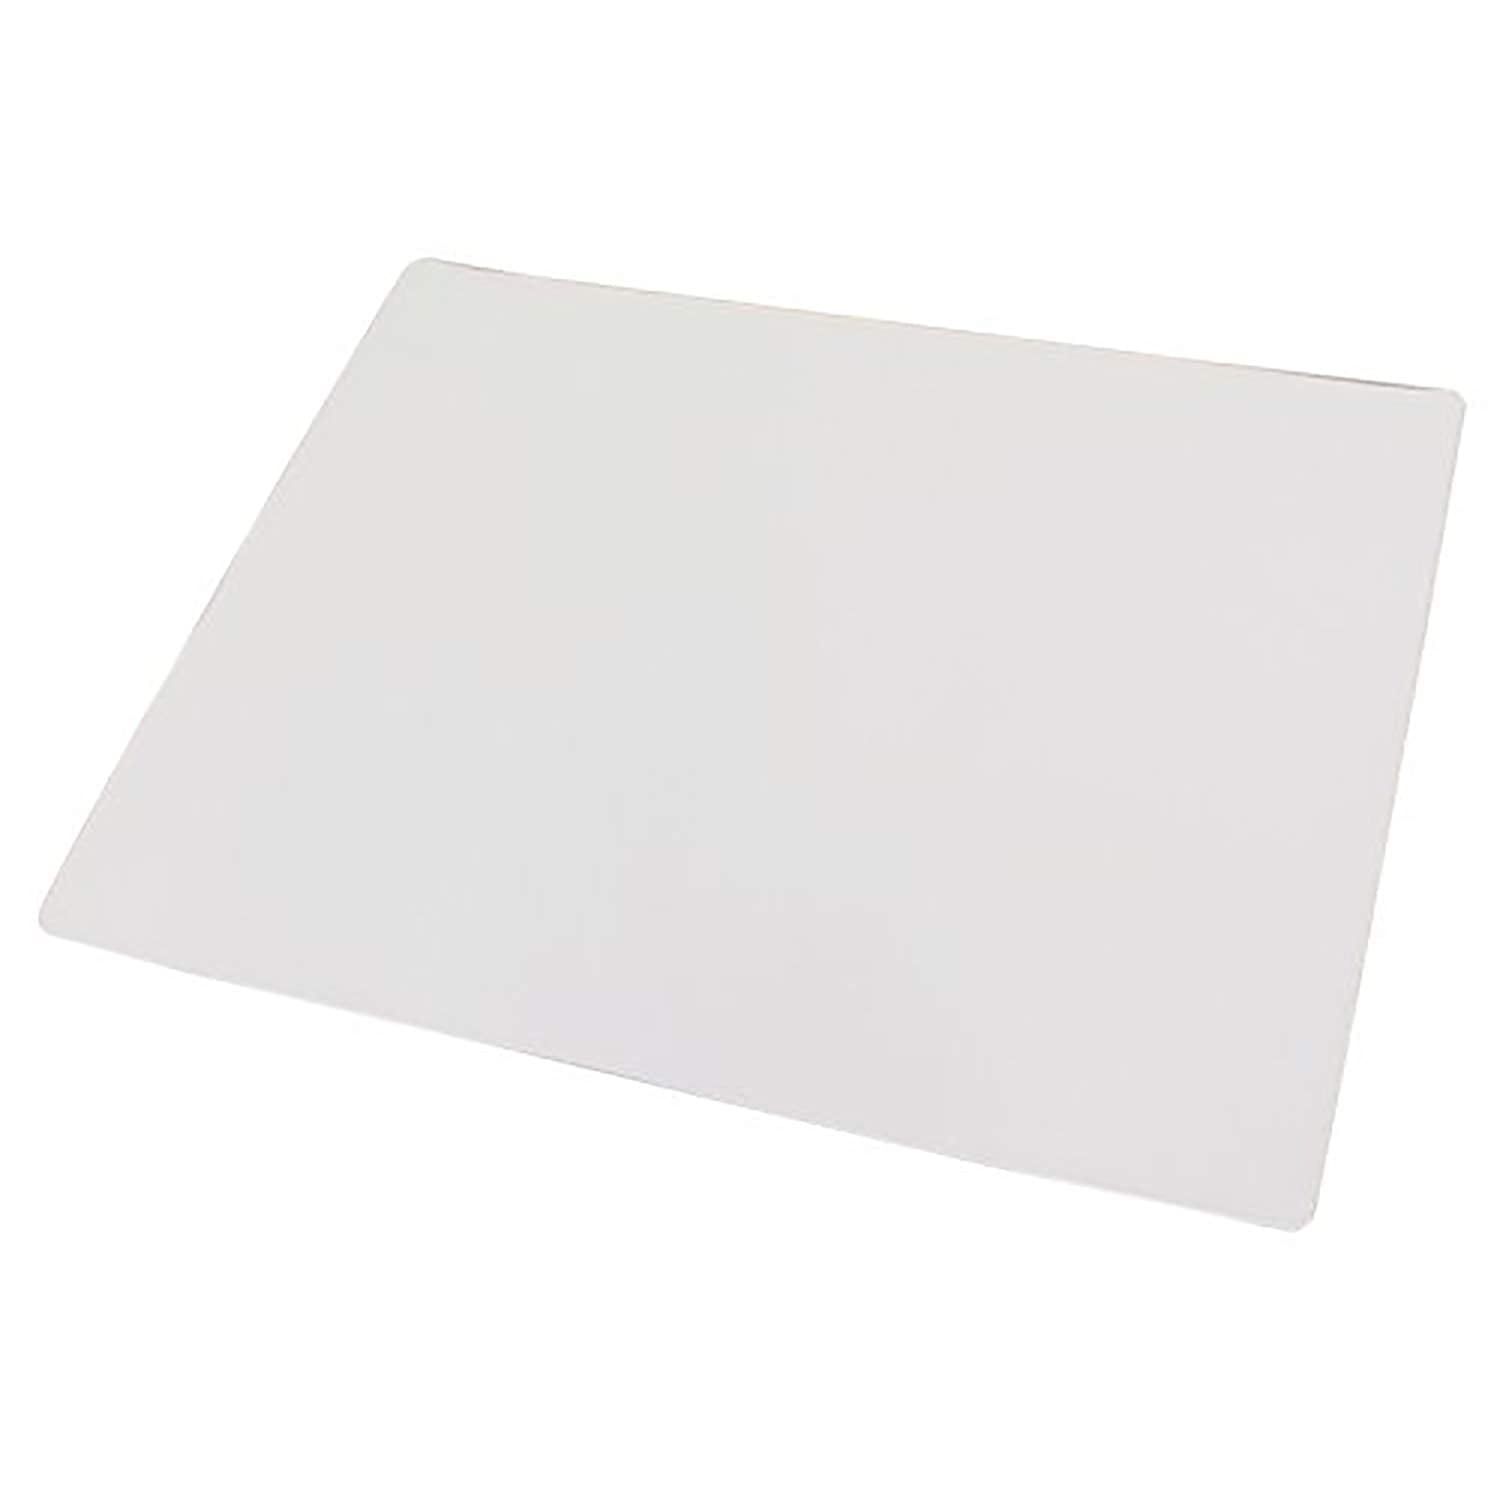 Cut N' Funnel Clear 2 Pack Flexible Plastic Cutting Board Mat 15 inch x 11.5 inch, Size: 15 x 11.5 x 0.04